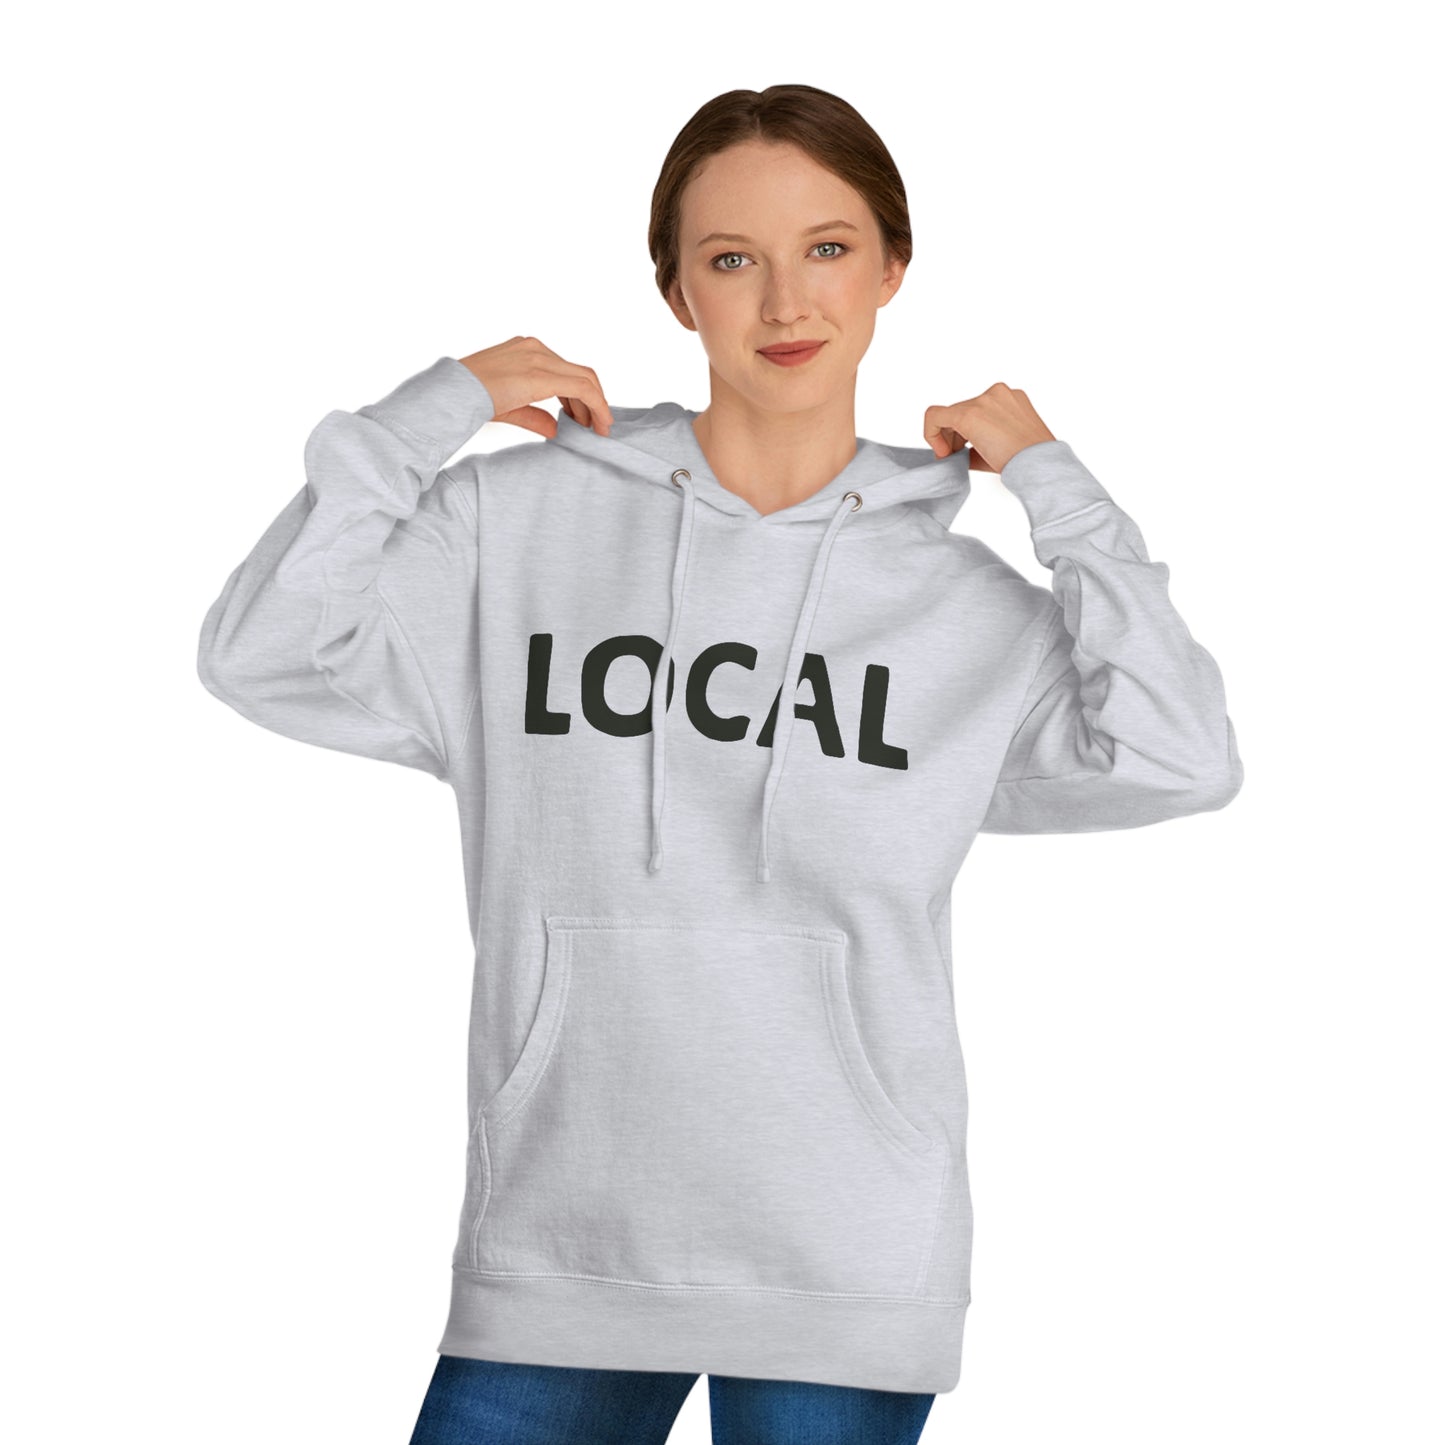 Local Unisex Hooded Sweatshirt